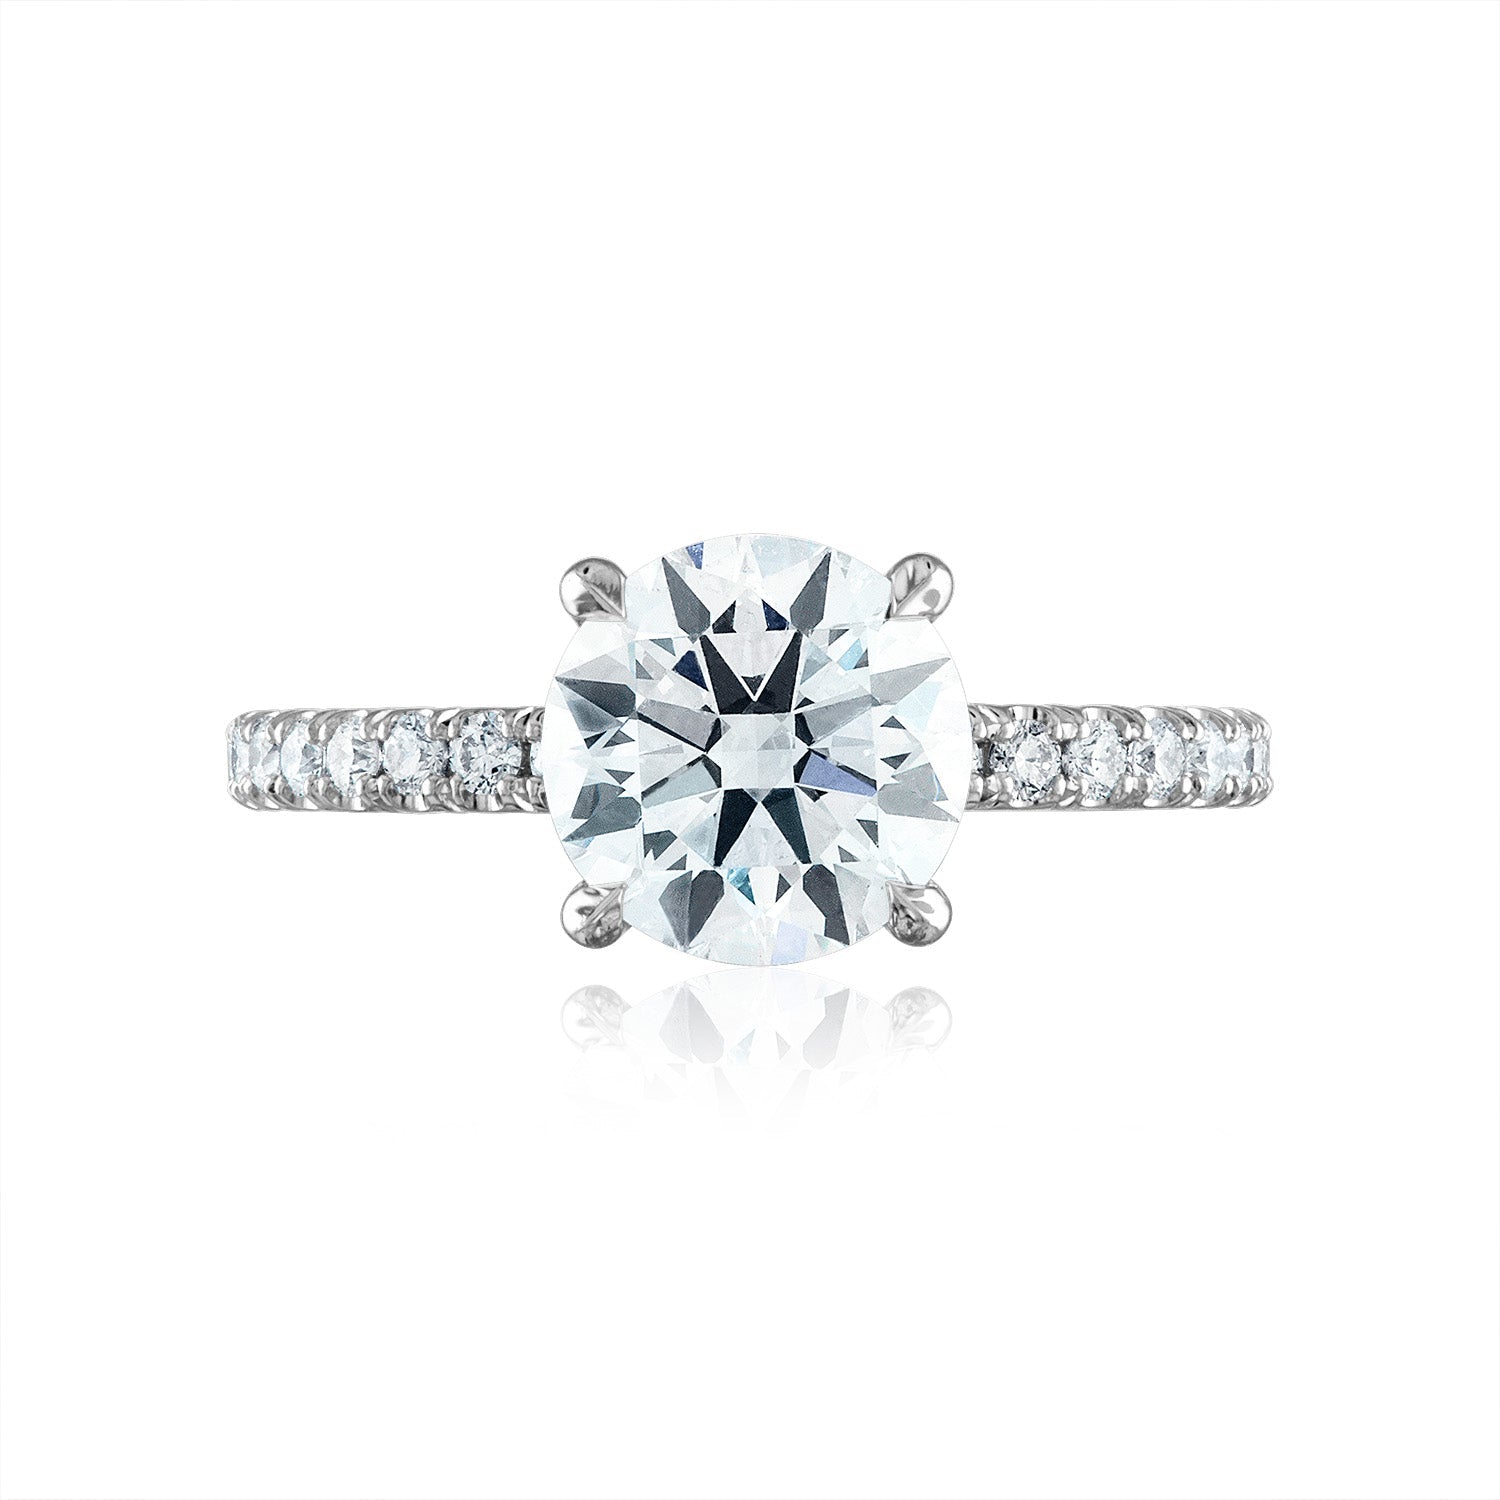 Round Pave Engagement Ring in Platinum